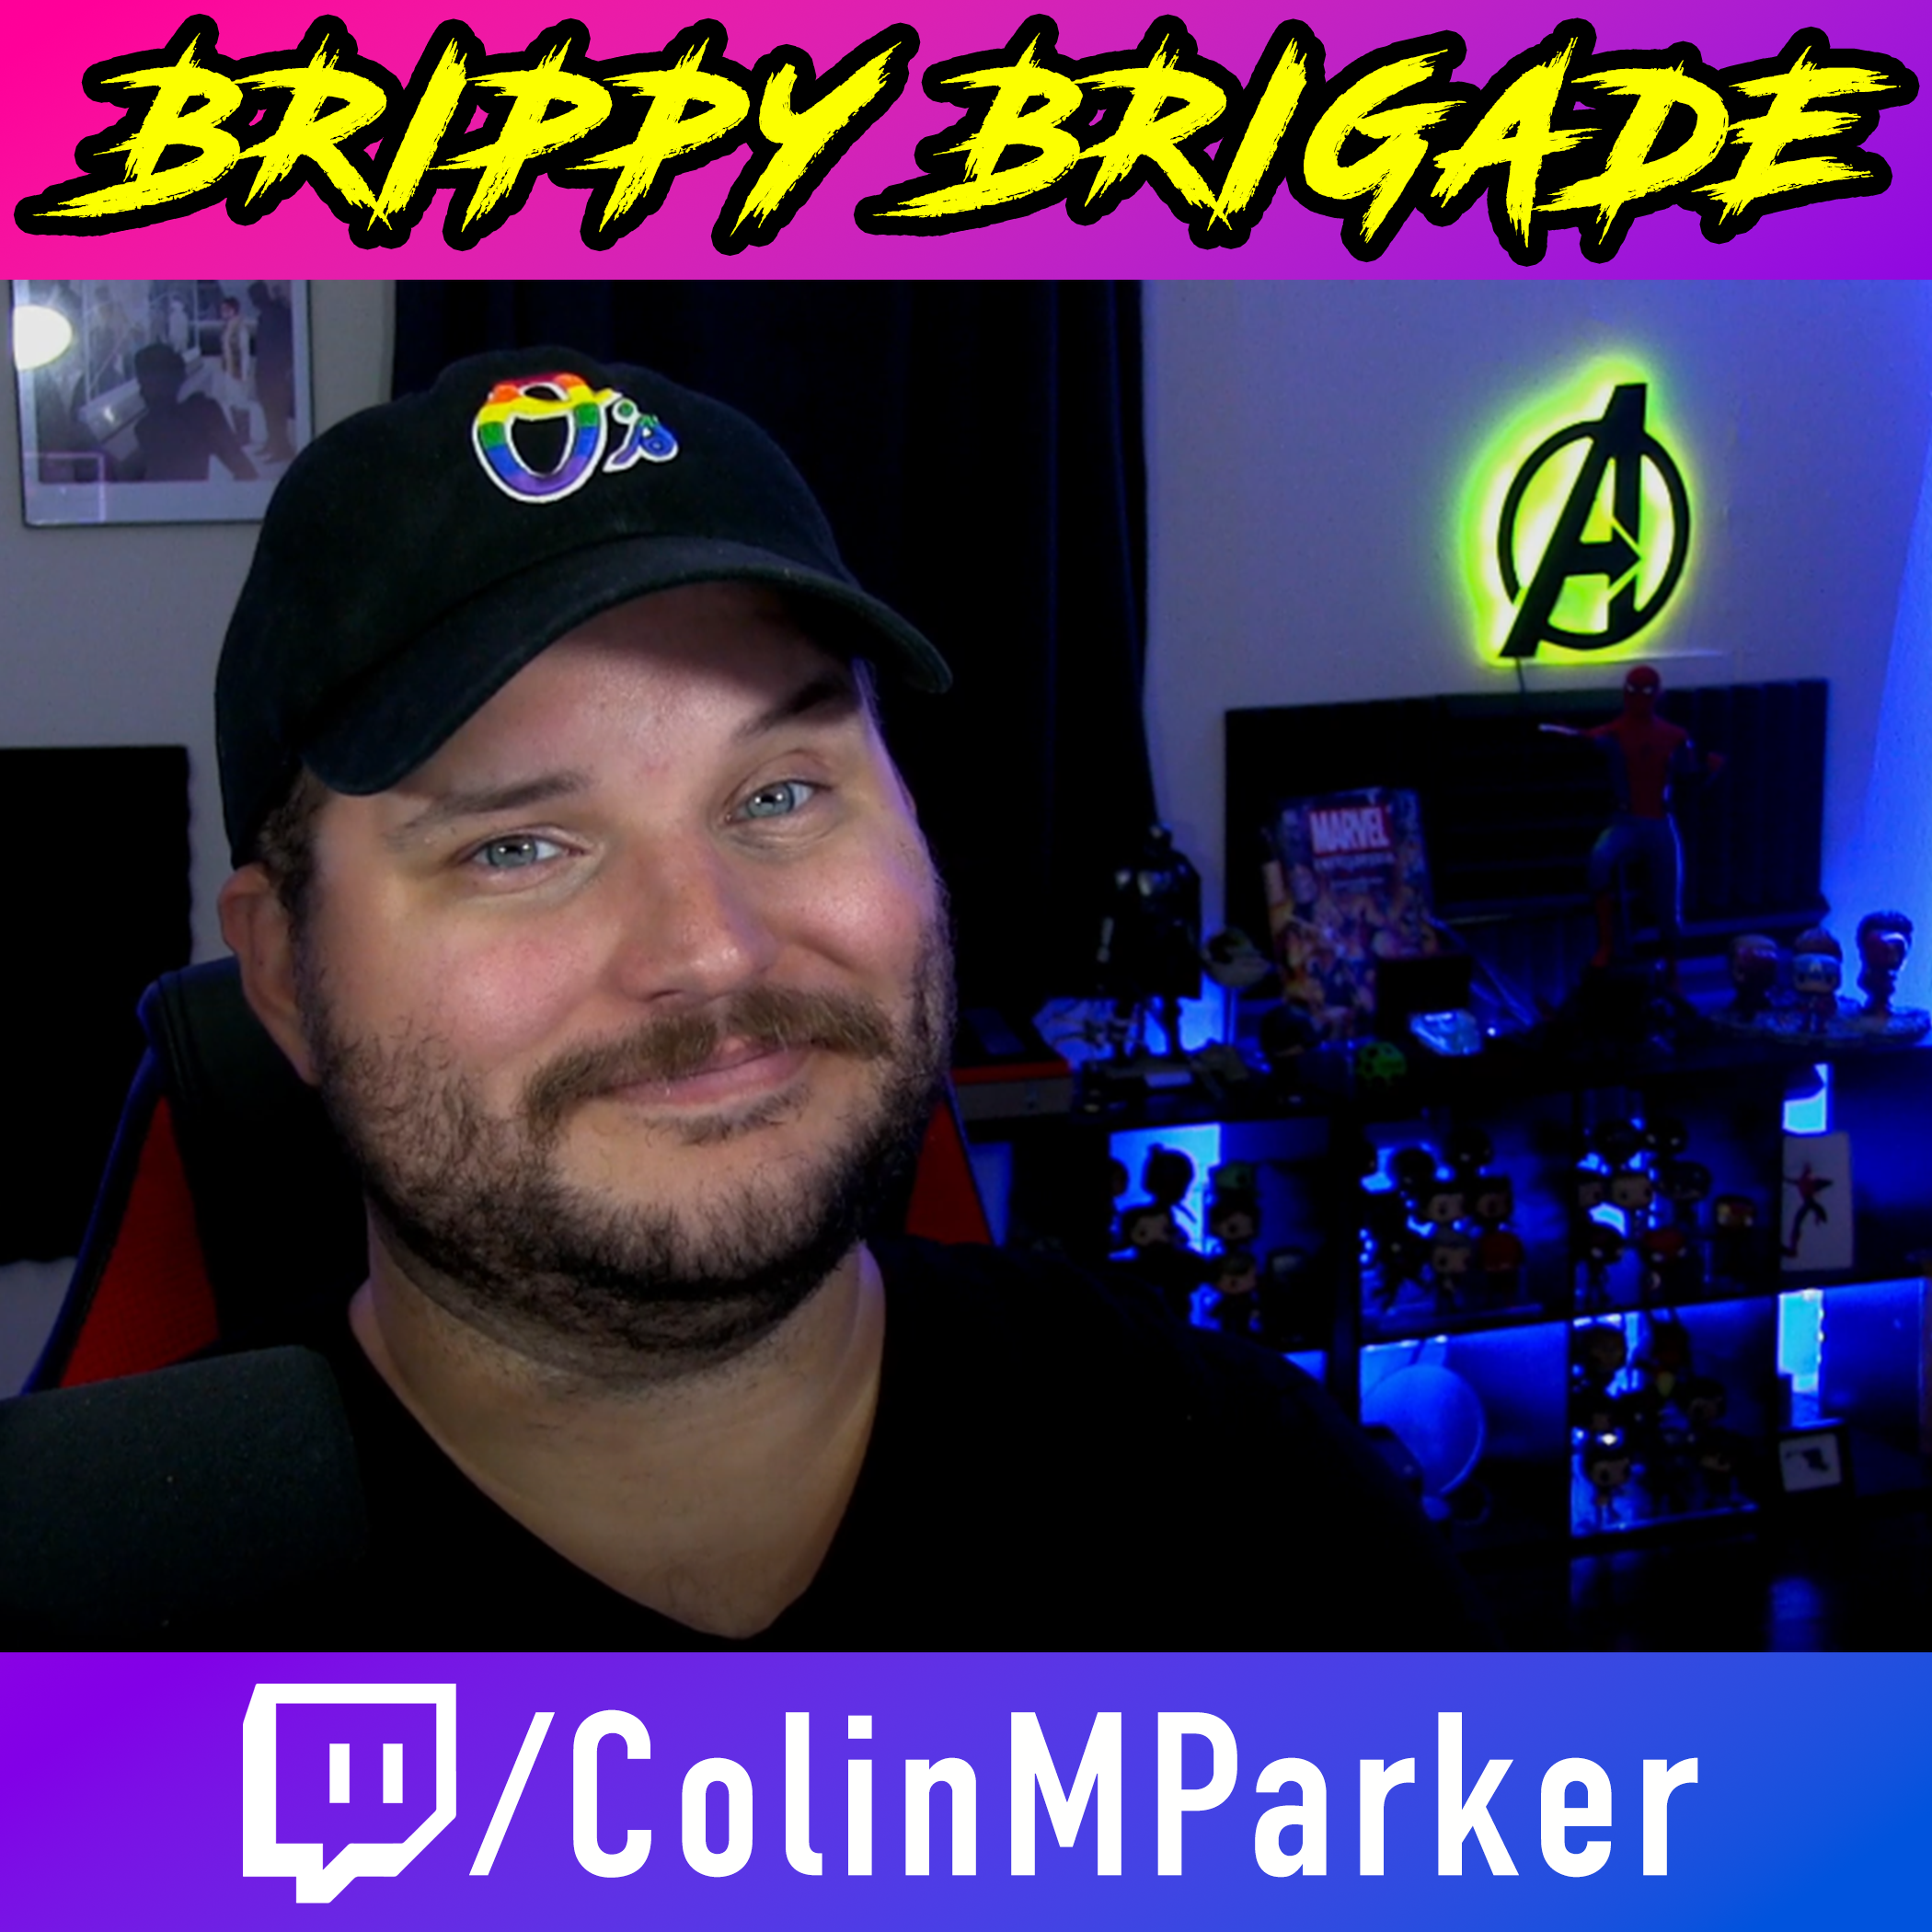 Brippy Brigade.png